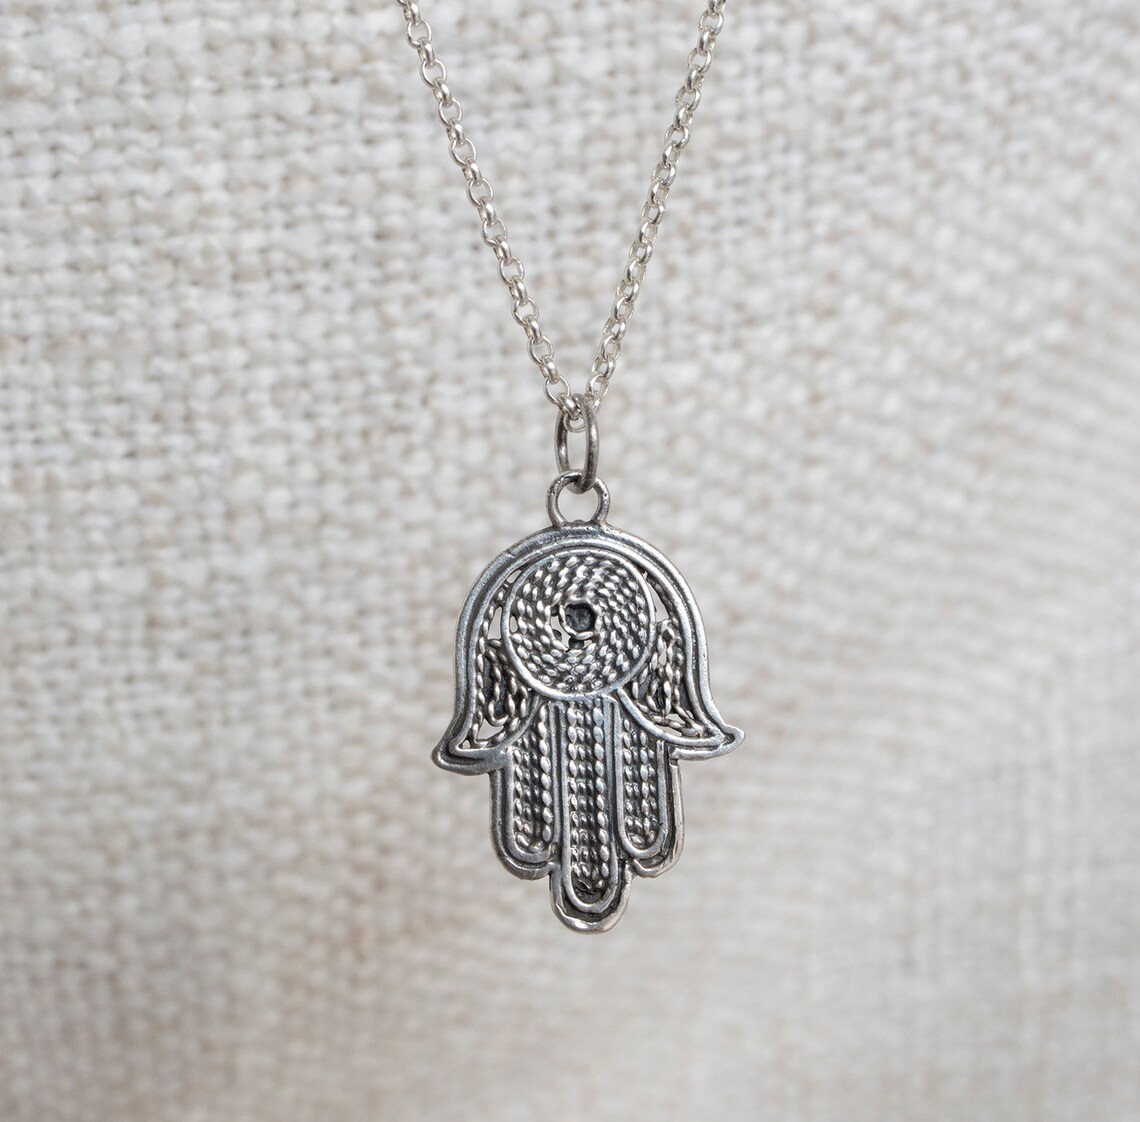 Hamsa silver pendant handmade sterling silver Khamsa amulet | Etsy